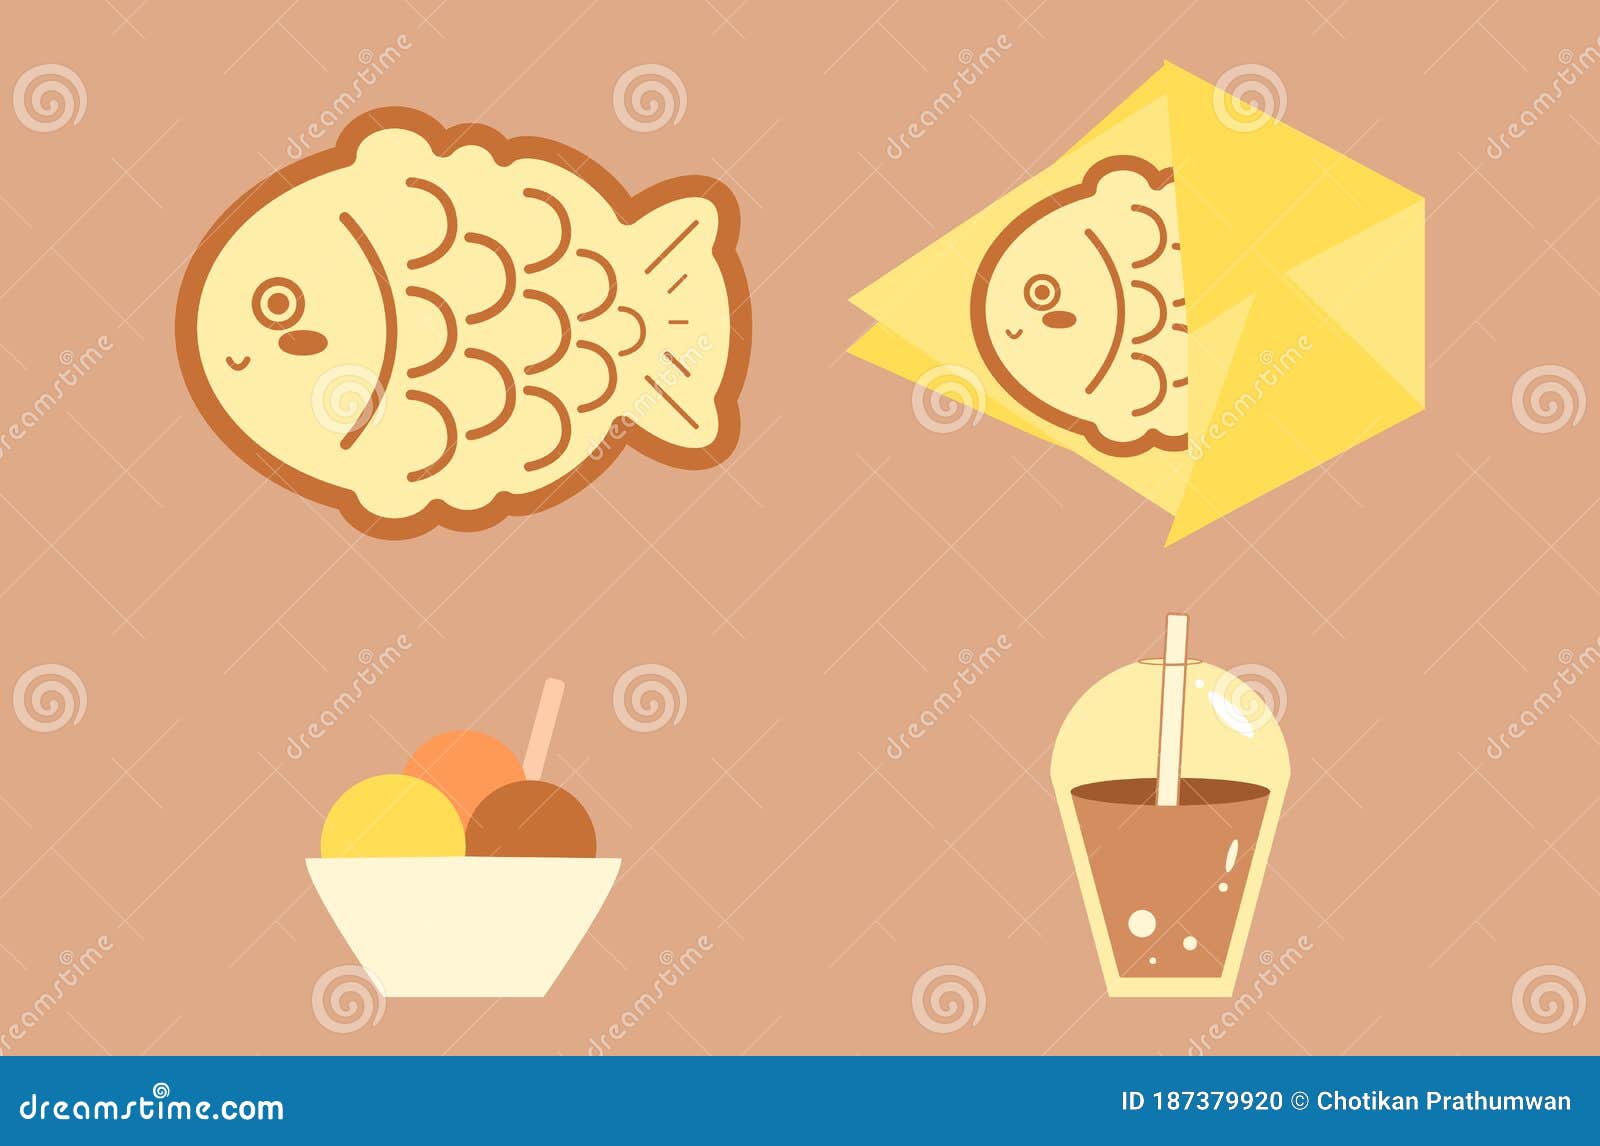 https://thumbs.dreamstime.com/z/fish-shaped-bread-korean-called-bungeoppang-japanese-taiyaki-ice-cream-vanilla-chocolate-orange-cup-drink-glass-187379920.jpg